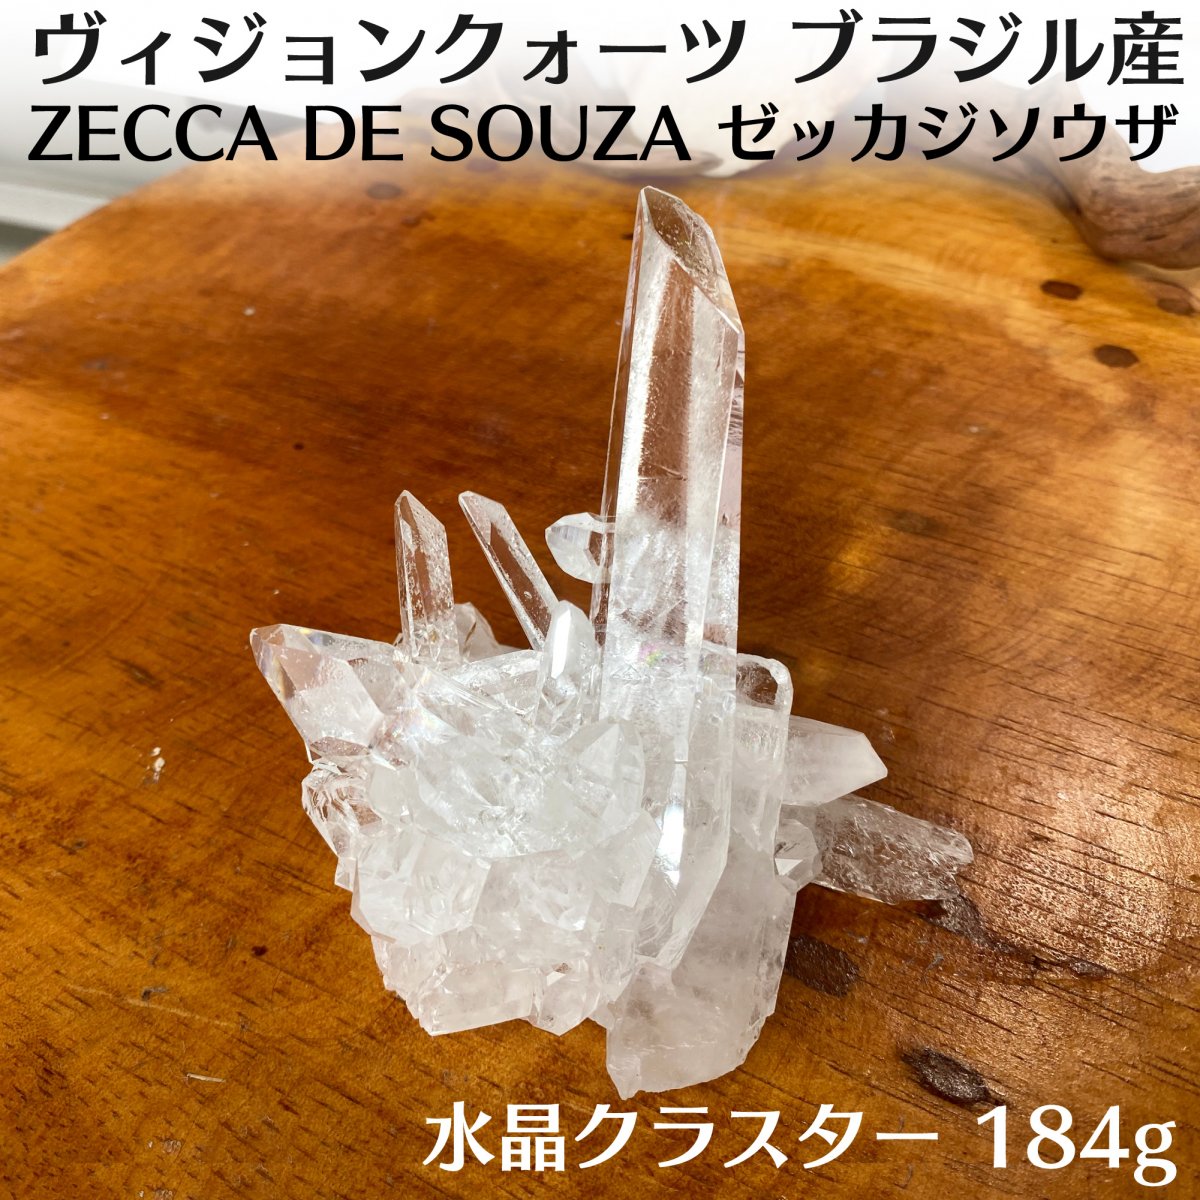 【20%OFF】ヴィジョンクォーツ 水晶クラスター(184g)/ZECA DE SOUZA(ゼッカ・ジ・ソウザ産)